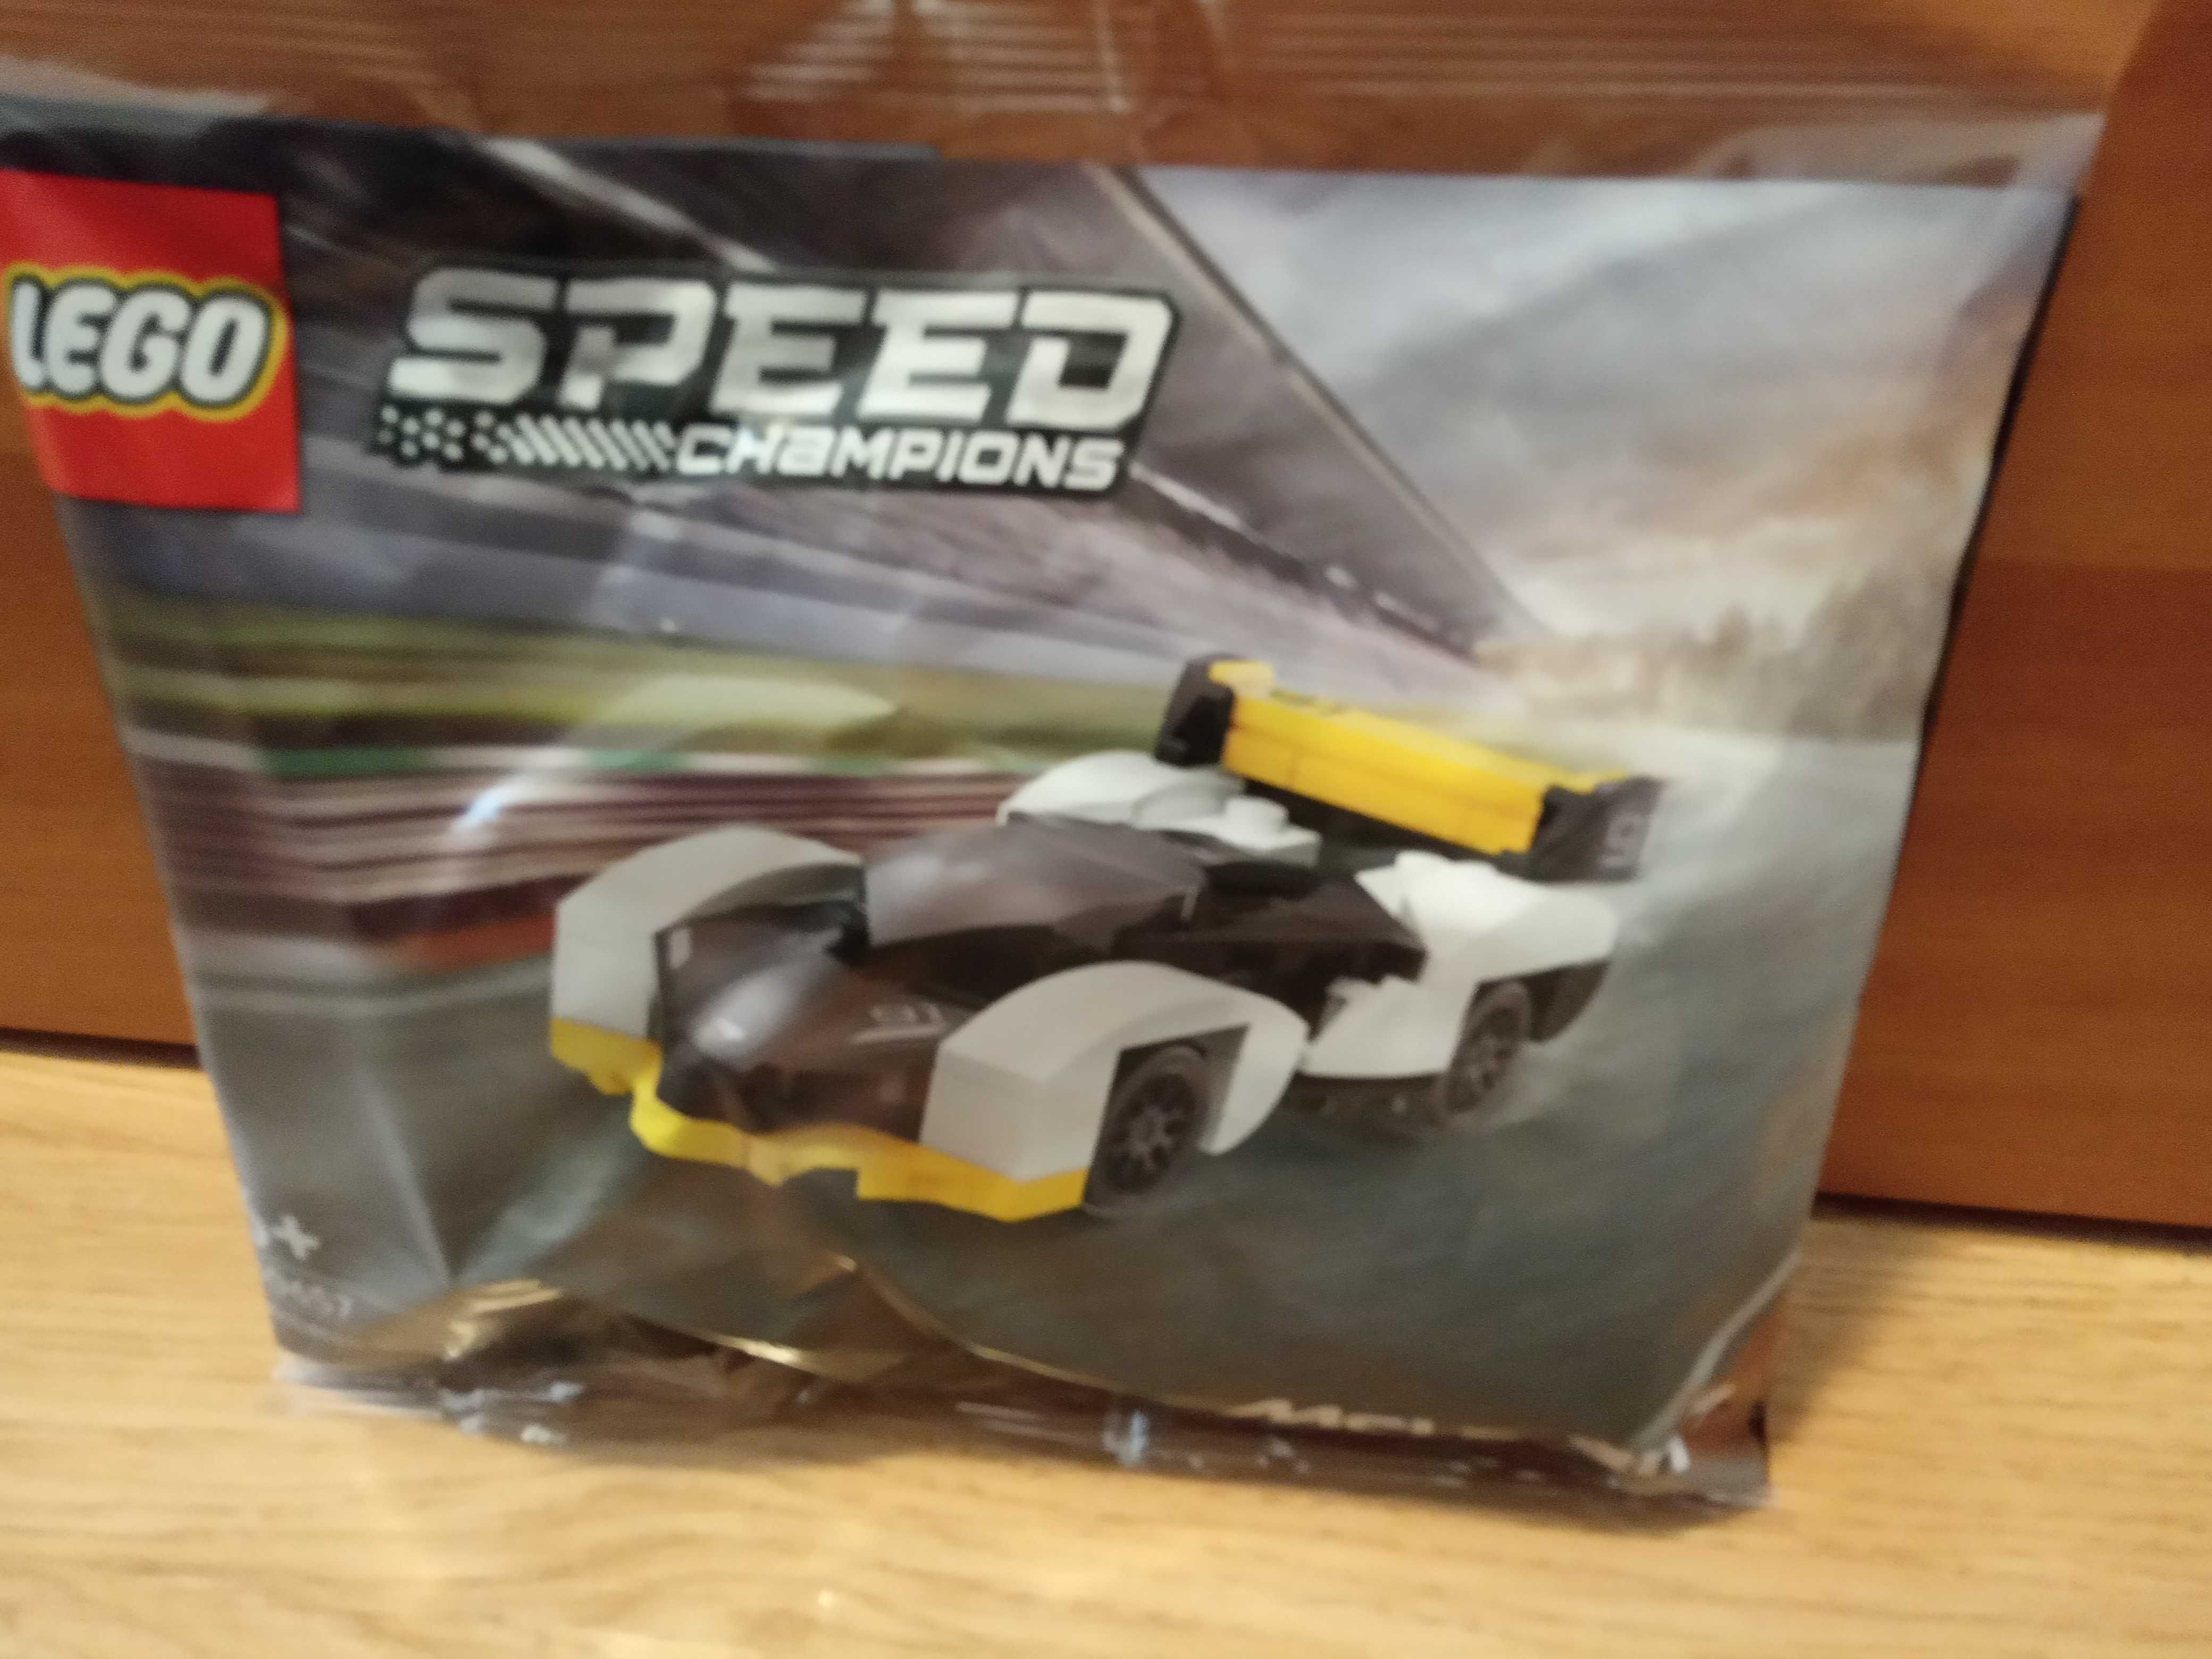 LEGO 30657 Speed Champions - McLaren Solus GT nou, sigilat